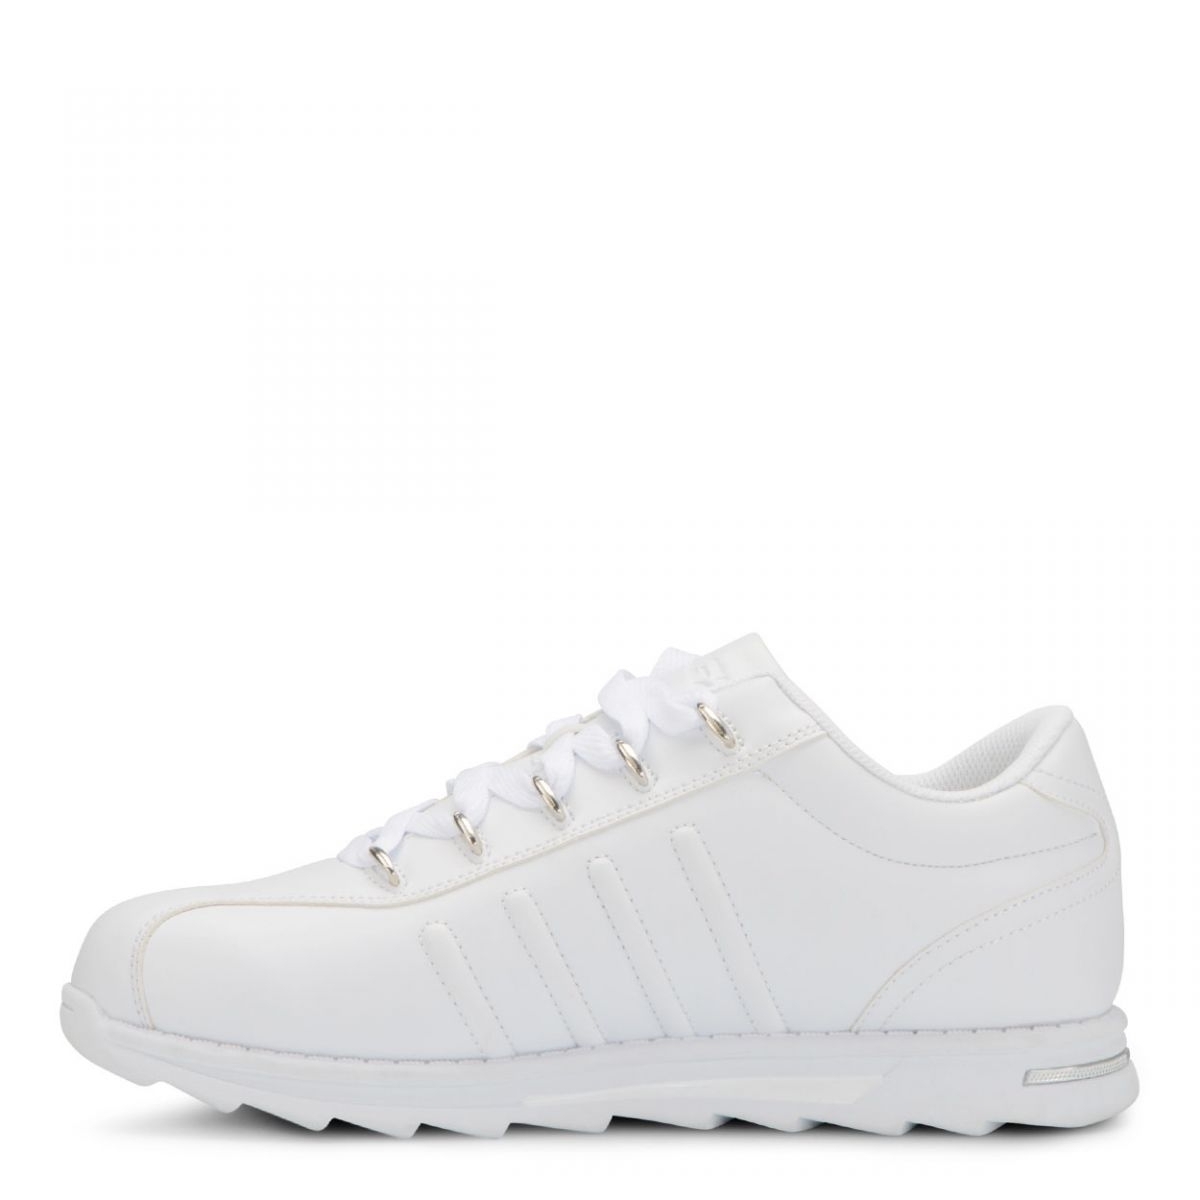 Lugz Men's Changeover II Sneaker White - MCHGIIV-100 WHITE - WHITE, 10